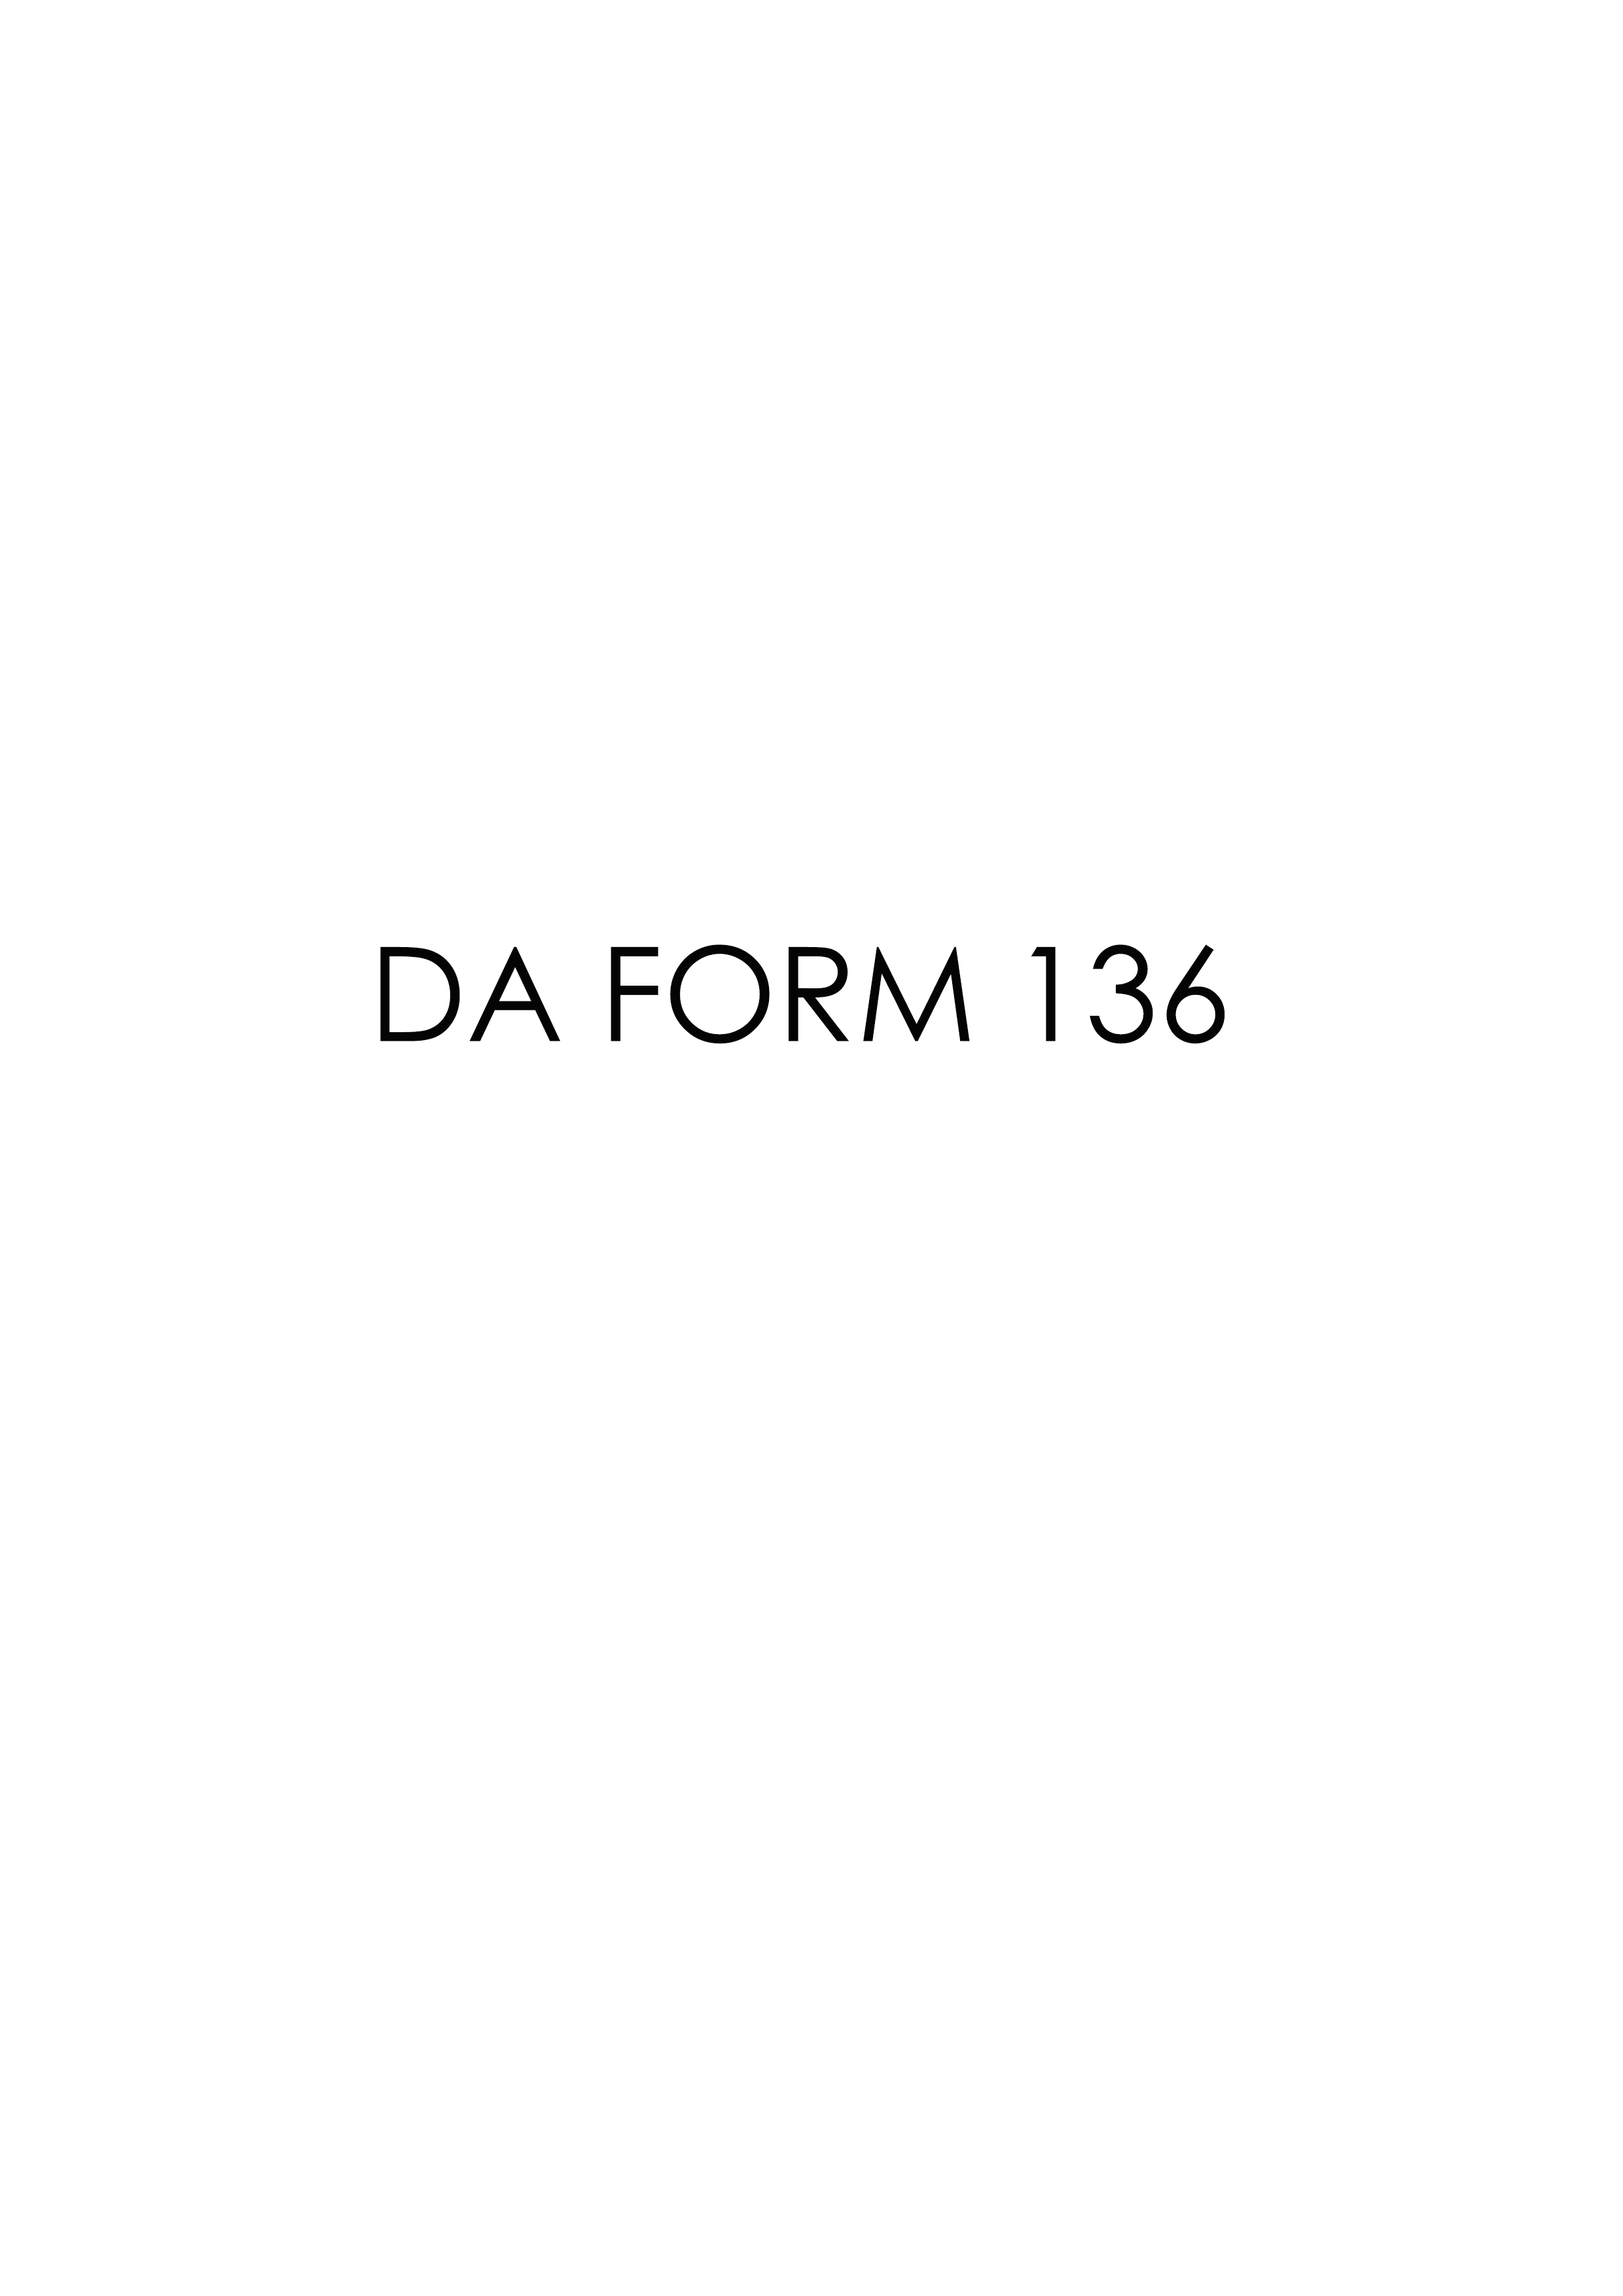 da Form 136 fillable